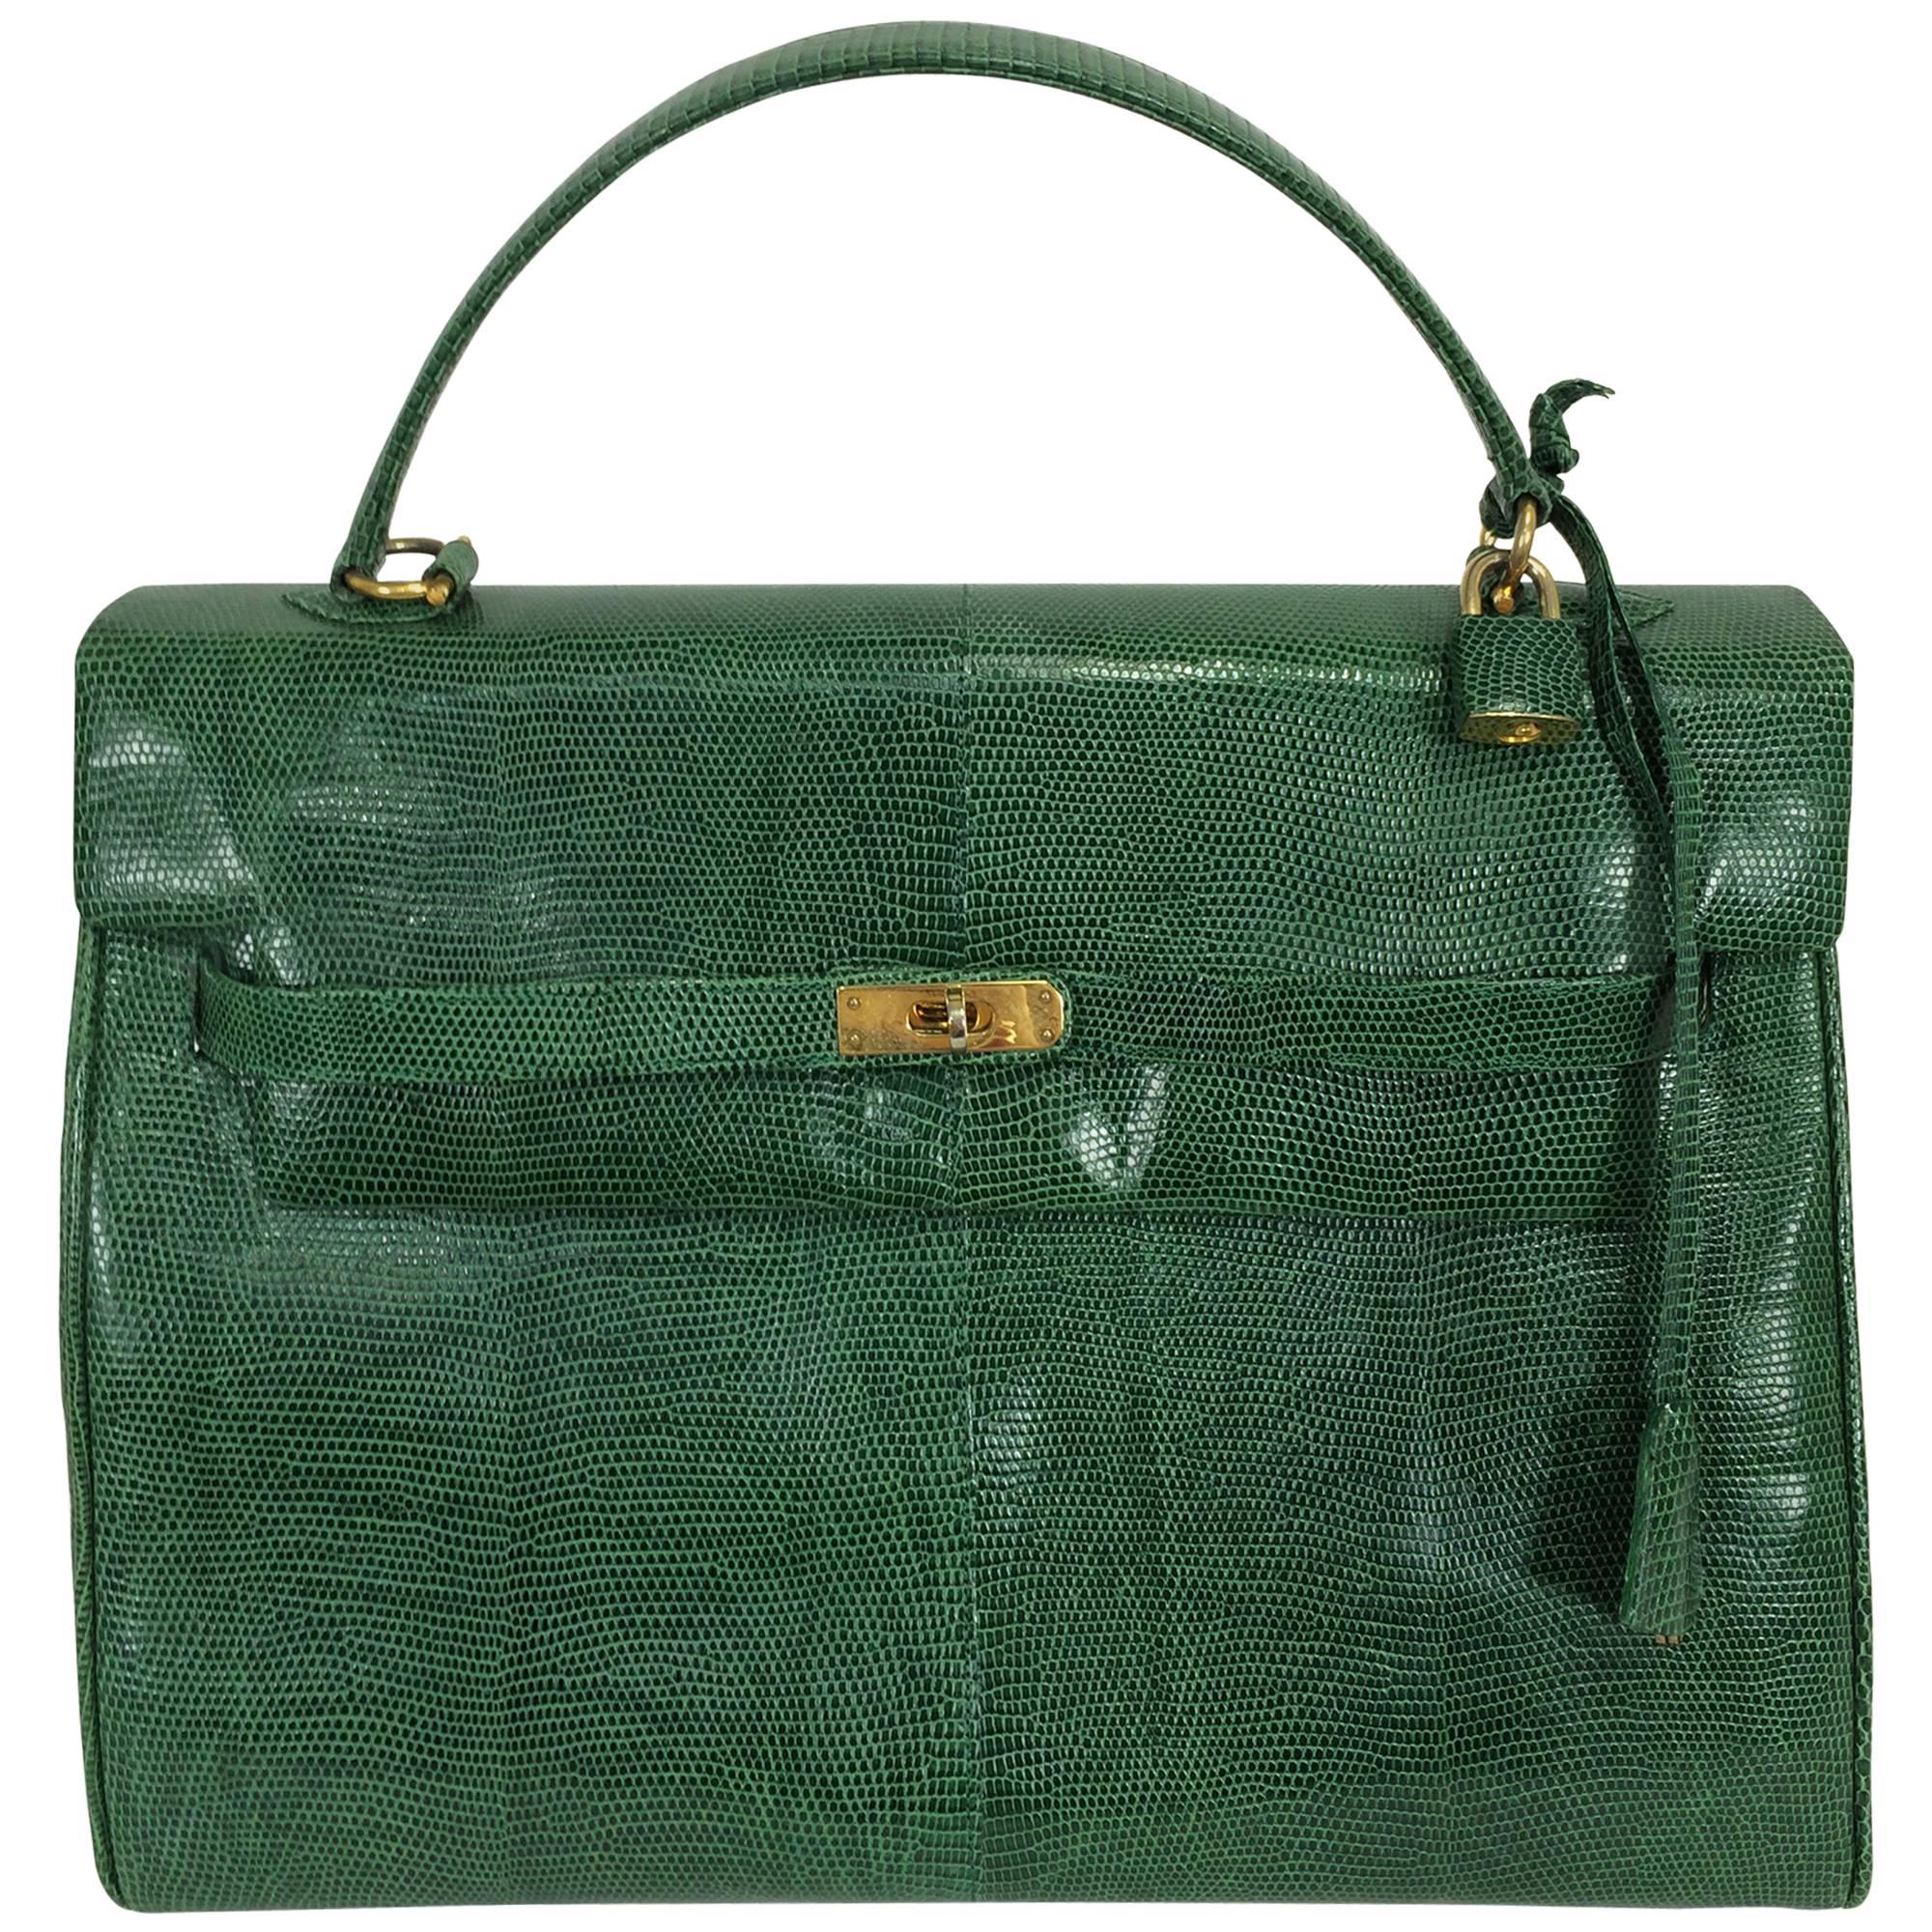 Luc Benoit green glazed lizard Kelly style handbag gold hardware 1990s